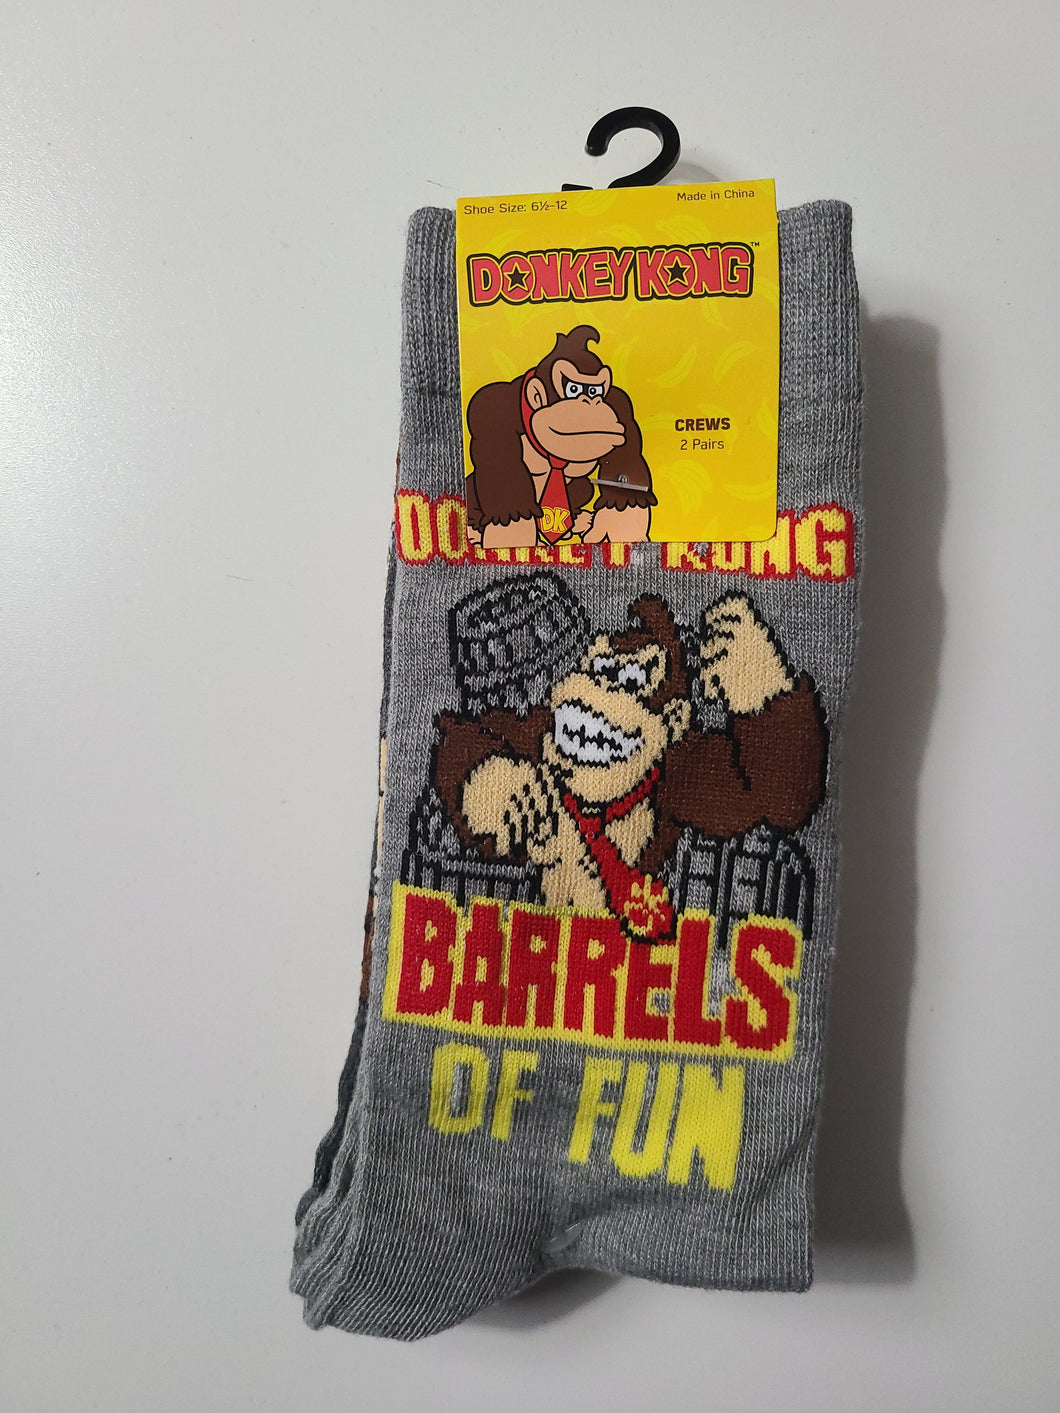 Novelty Cartoon And Video Game Character Socks - Donkey Kong - Monopoly - Sponge Bob & Patrick - Popeye